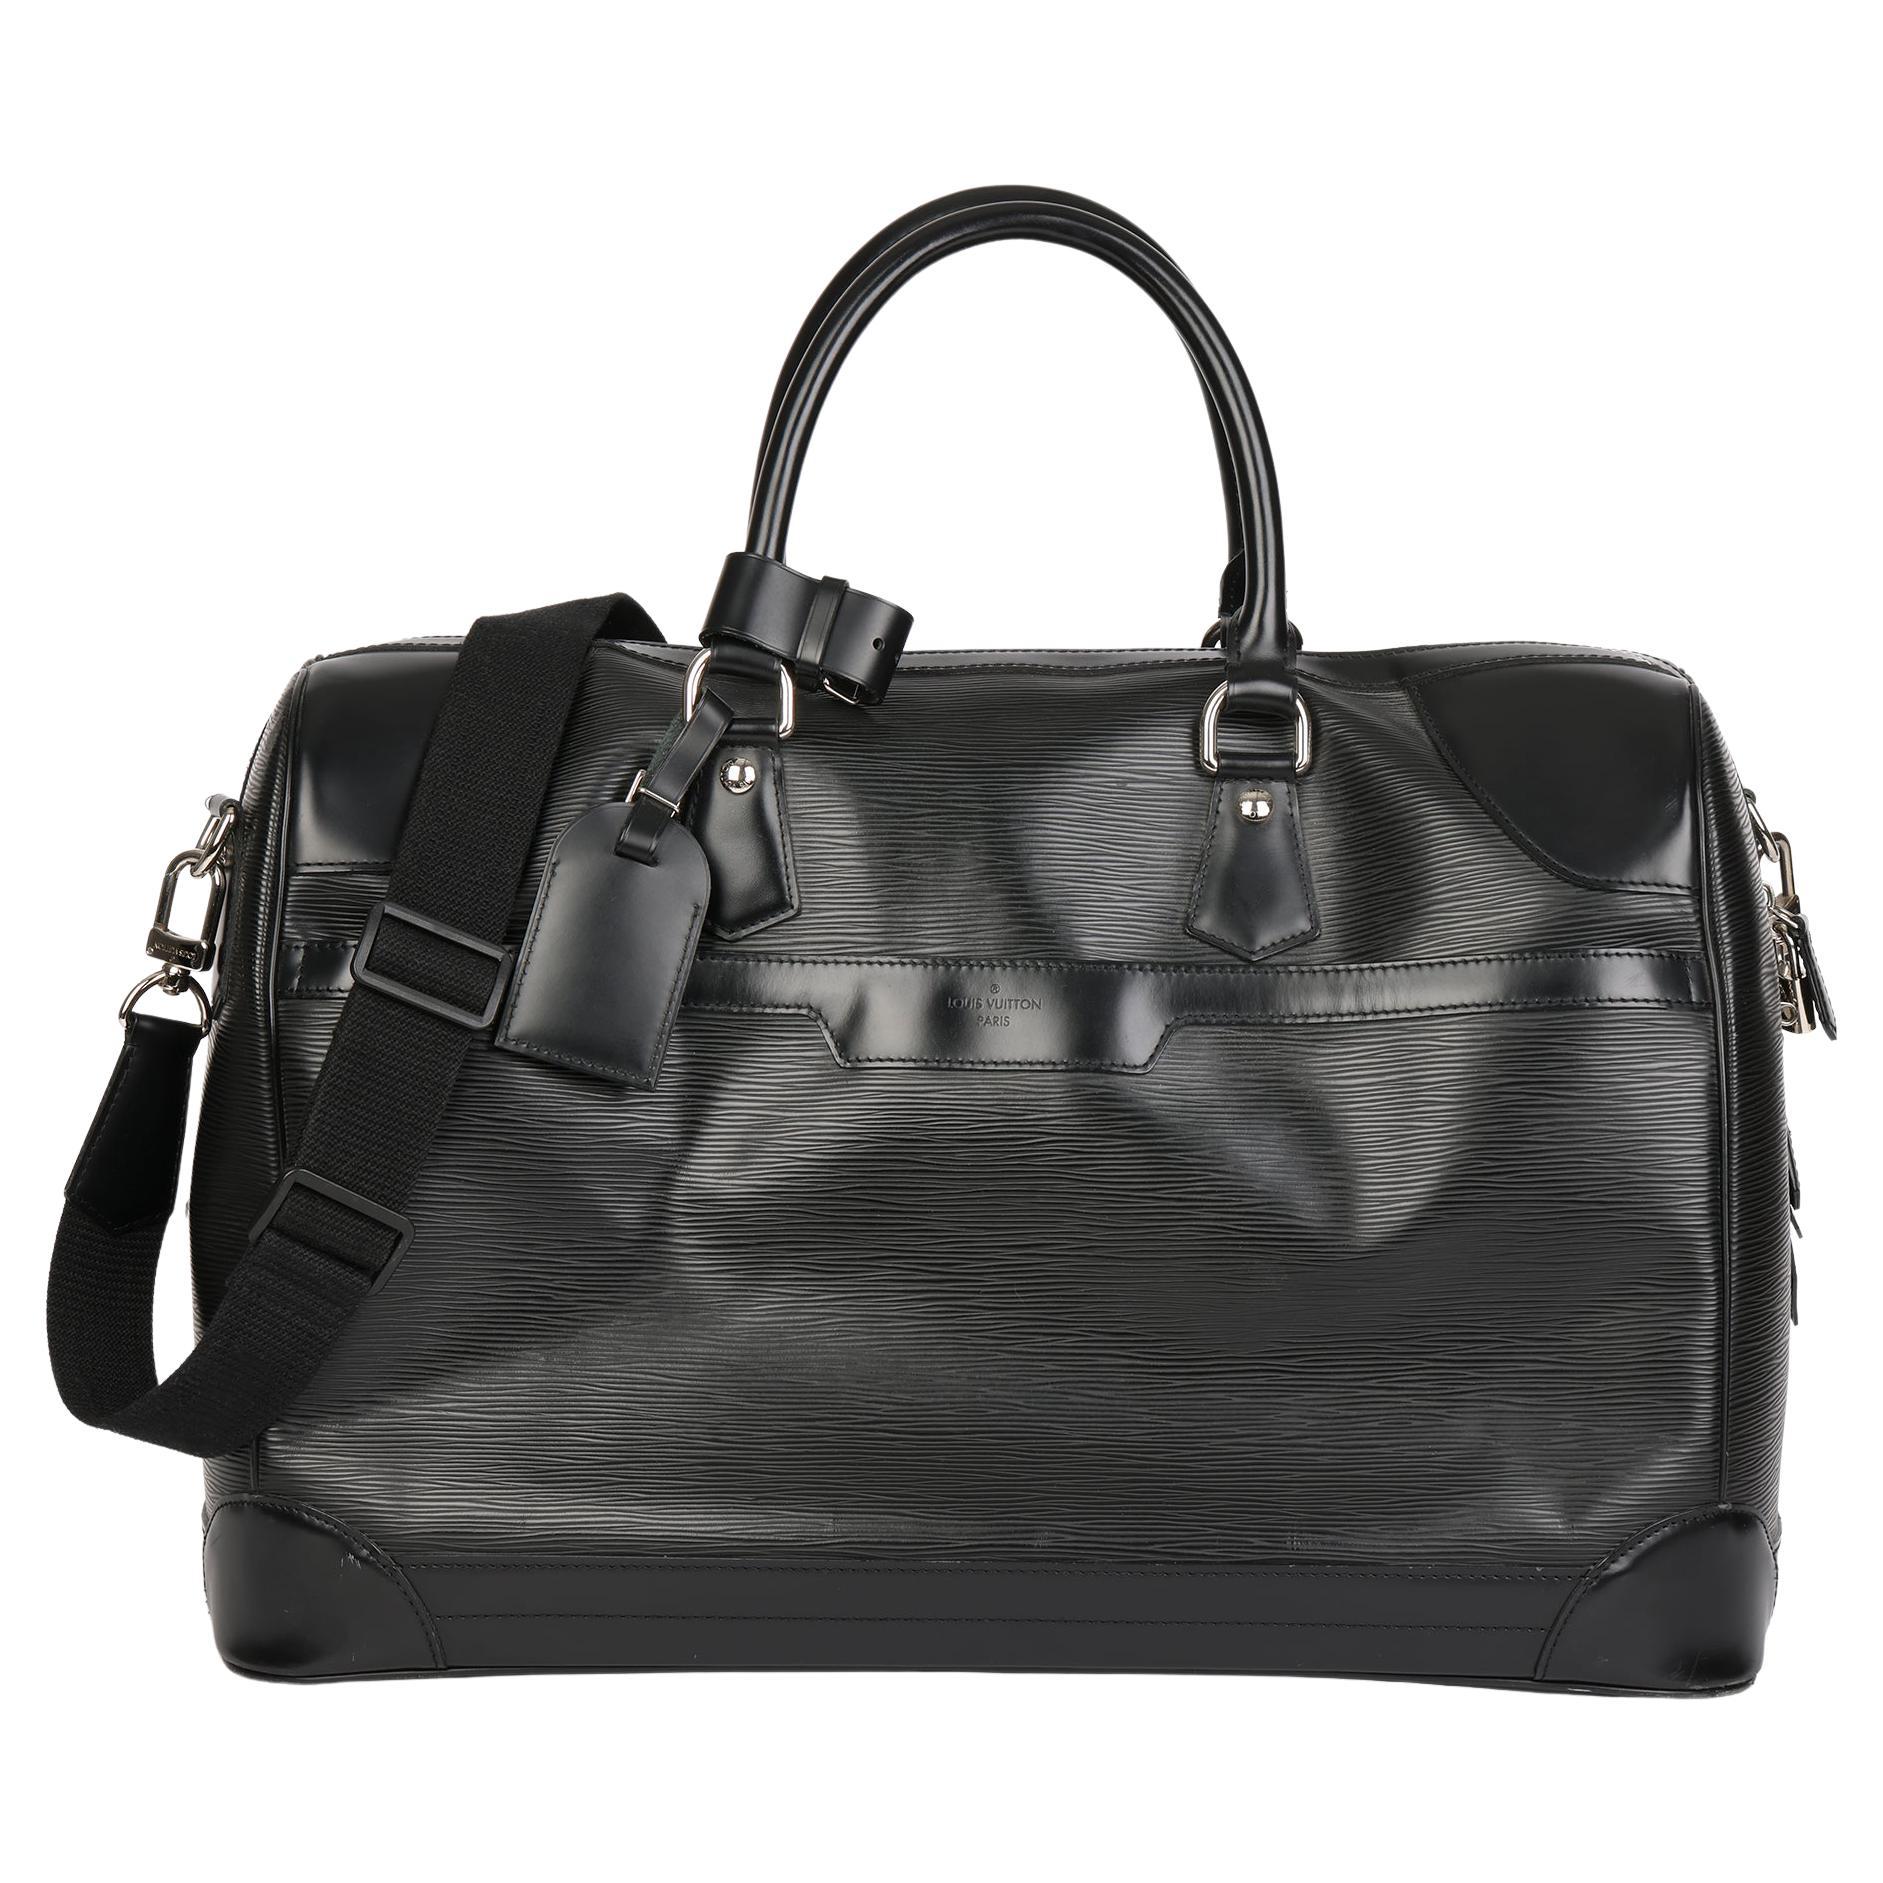 Man Bag Monday: Louis Vuitton Damier Graphite Voyage - PurseBlog